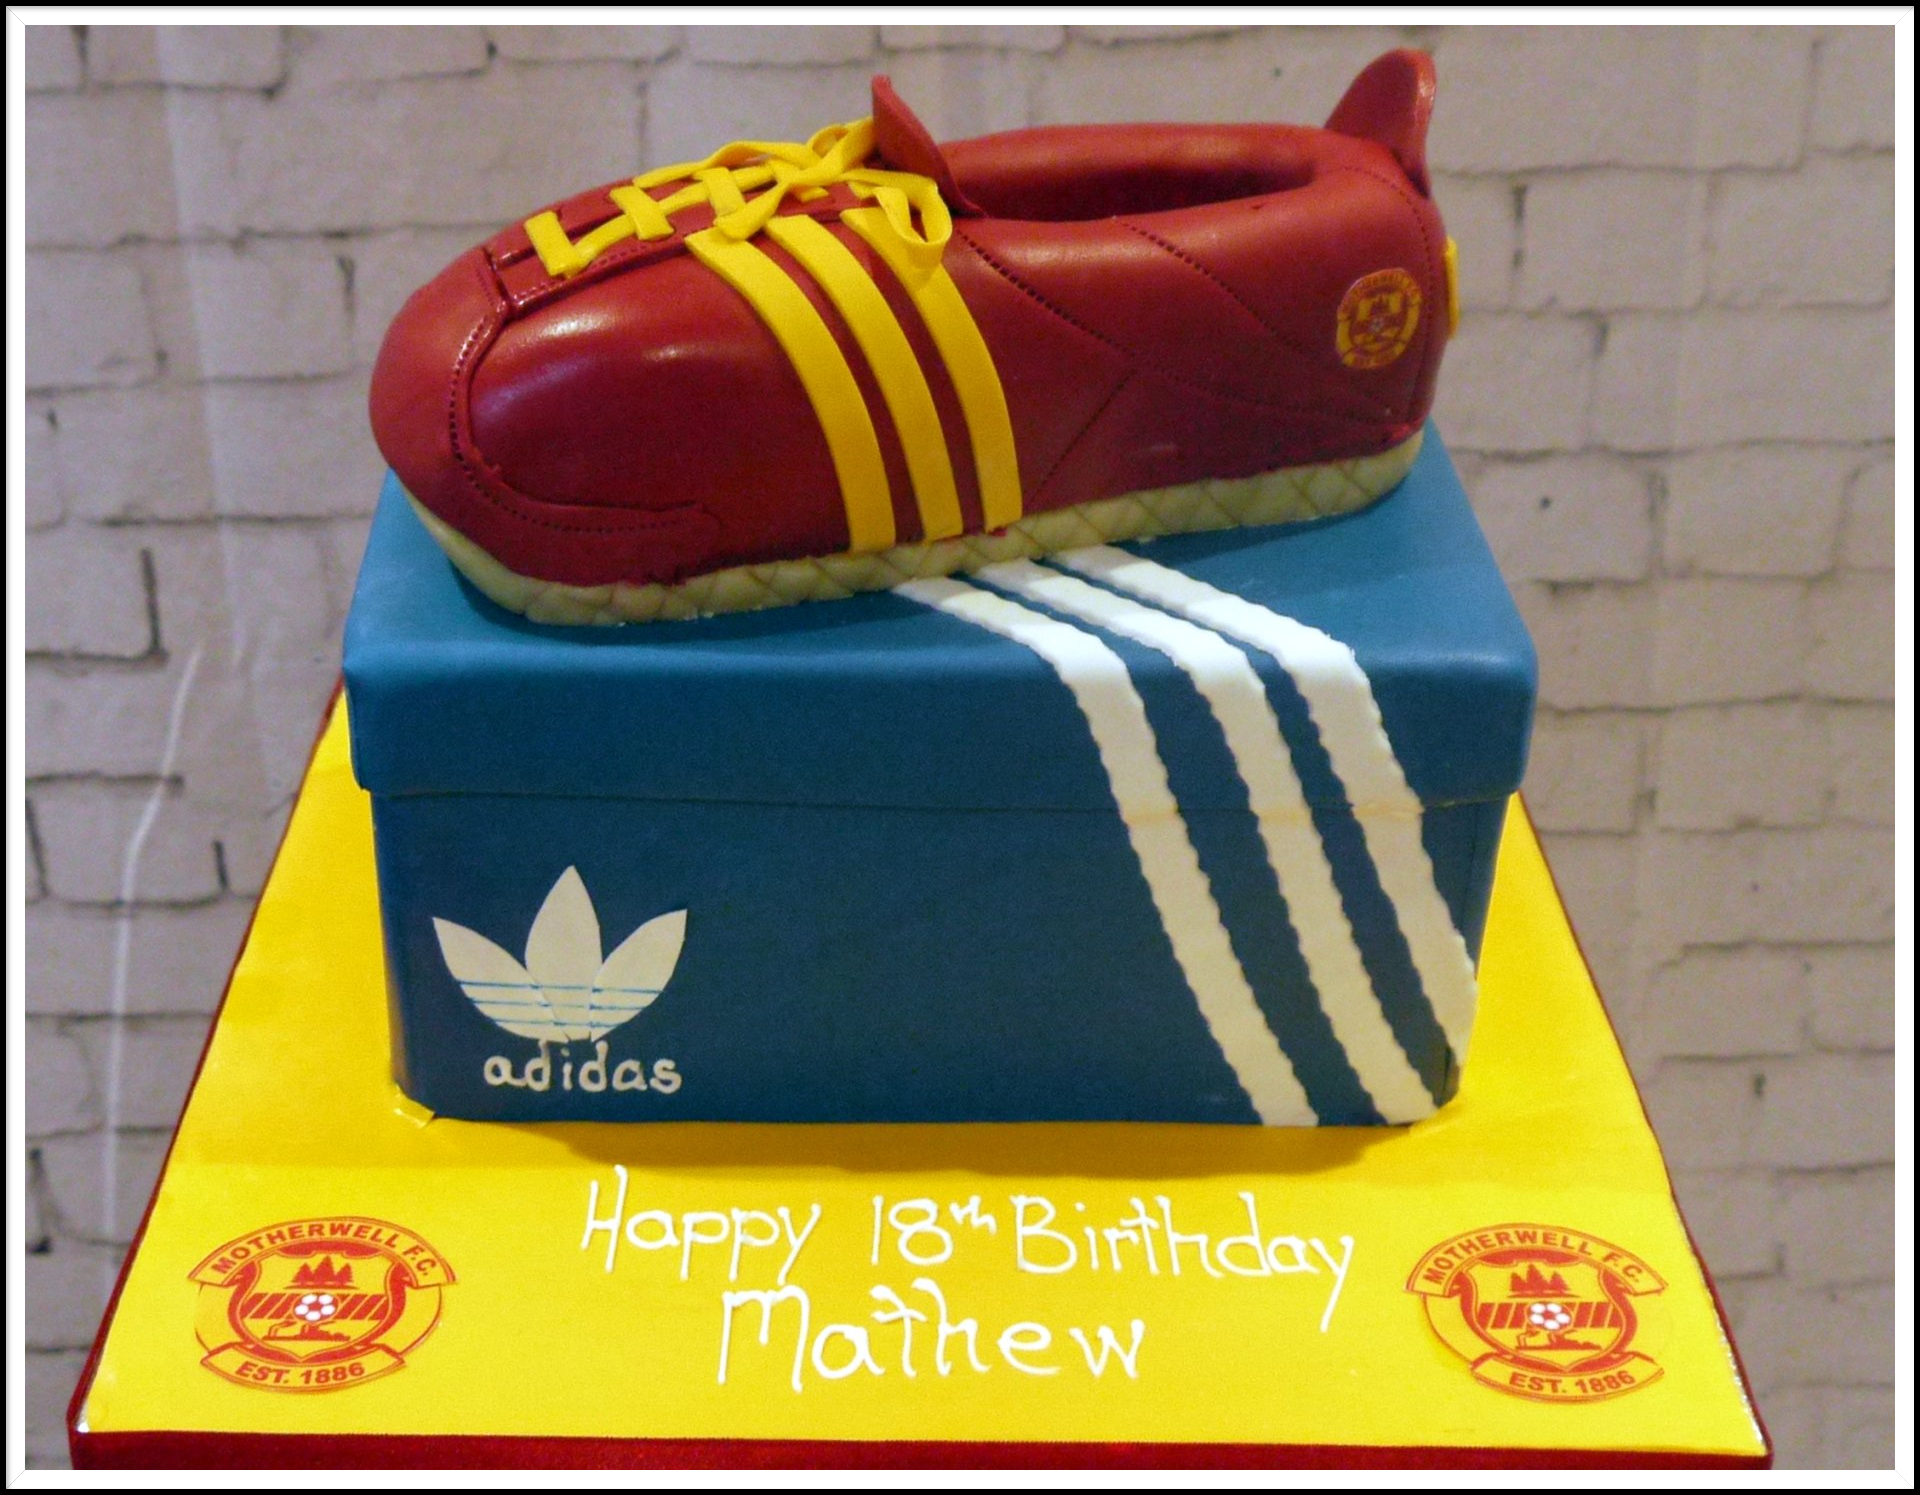 Football Boot and box cake